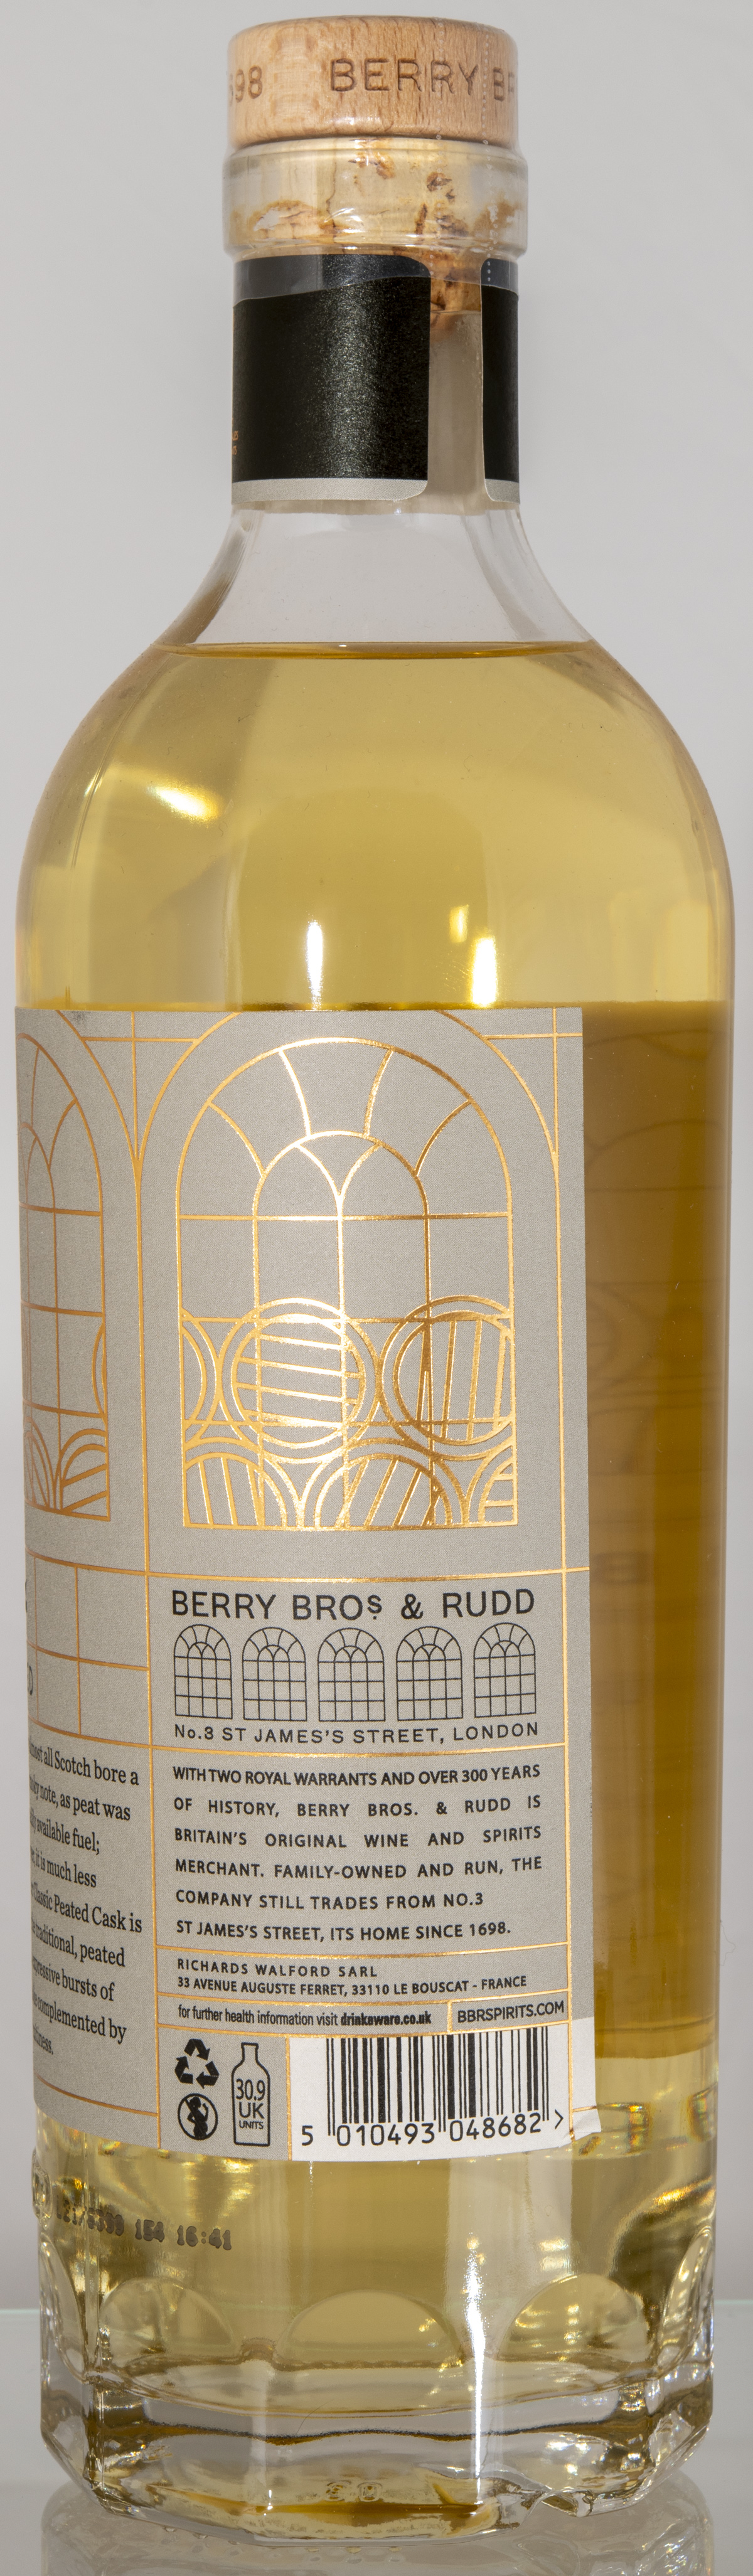 Billede: D85_8303 - Berry Bros and Rudd - Peated Cask Matured - bottle back.jpg